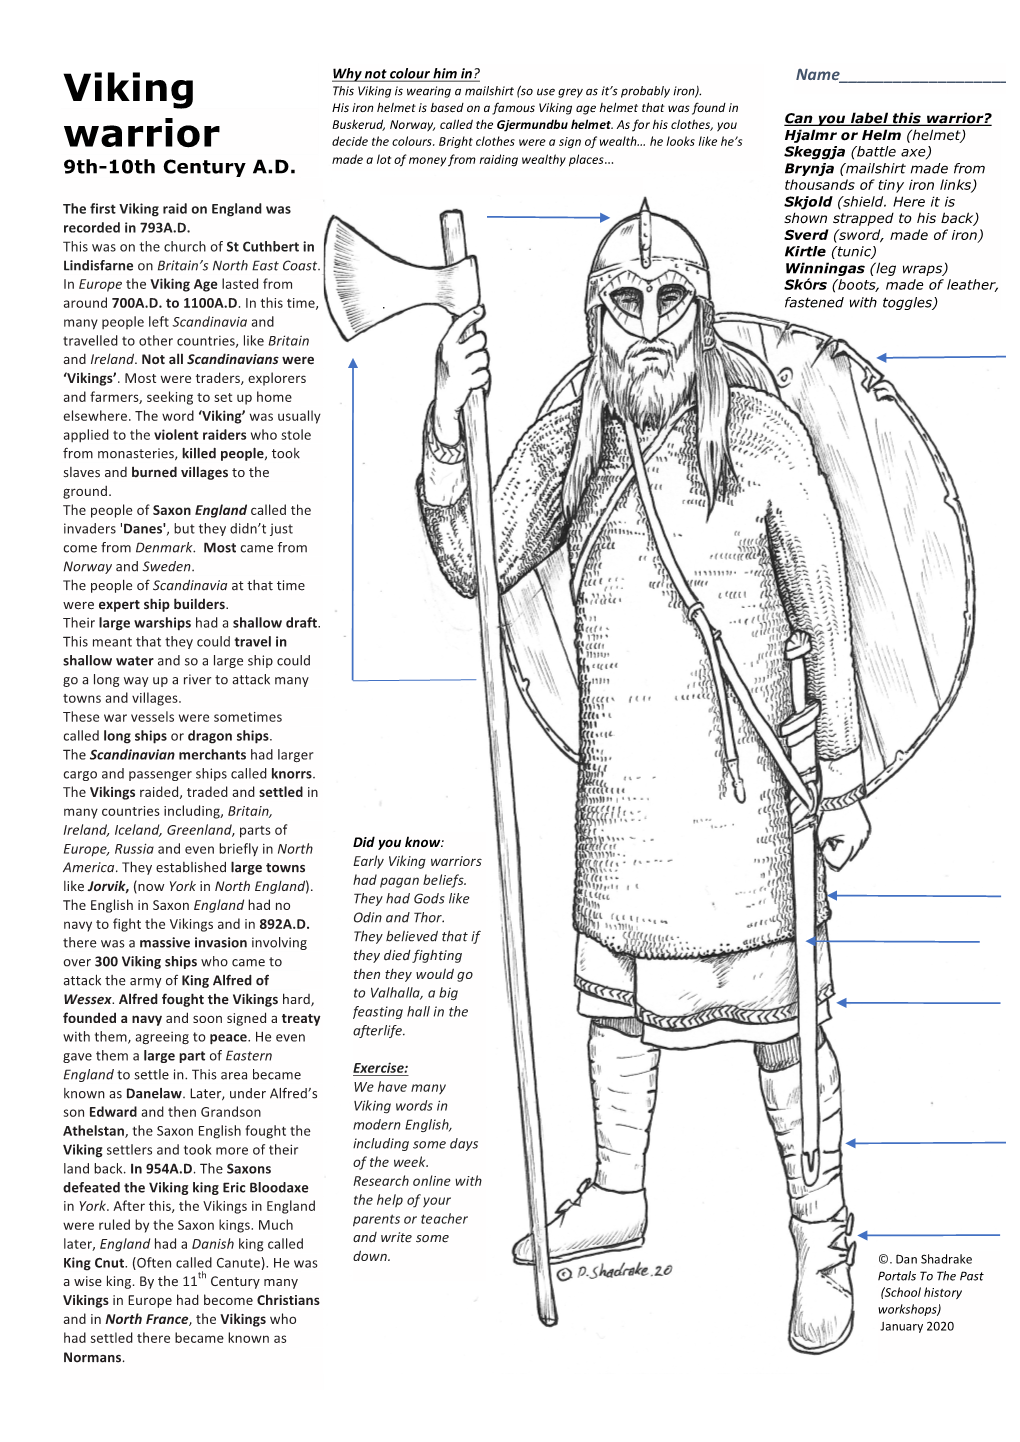 Viking Warriors Like Jorvik, (Now York in North England)